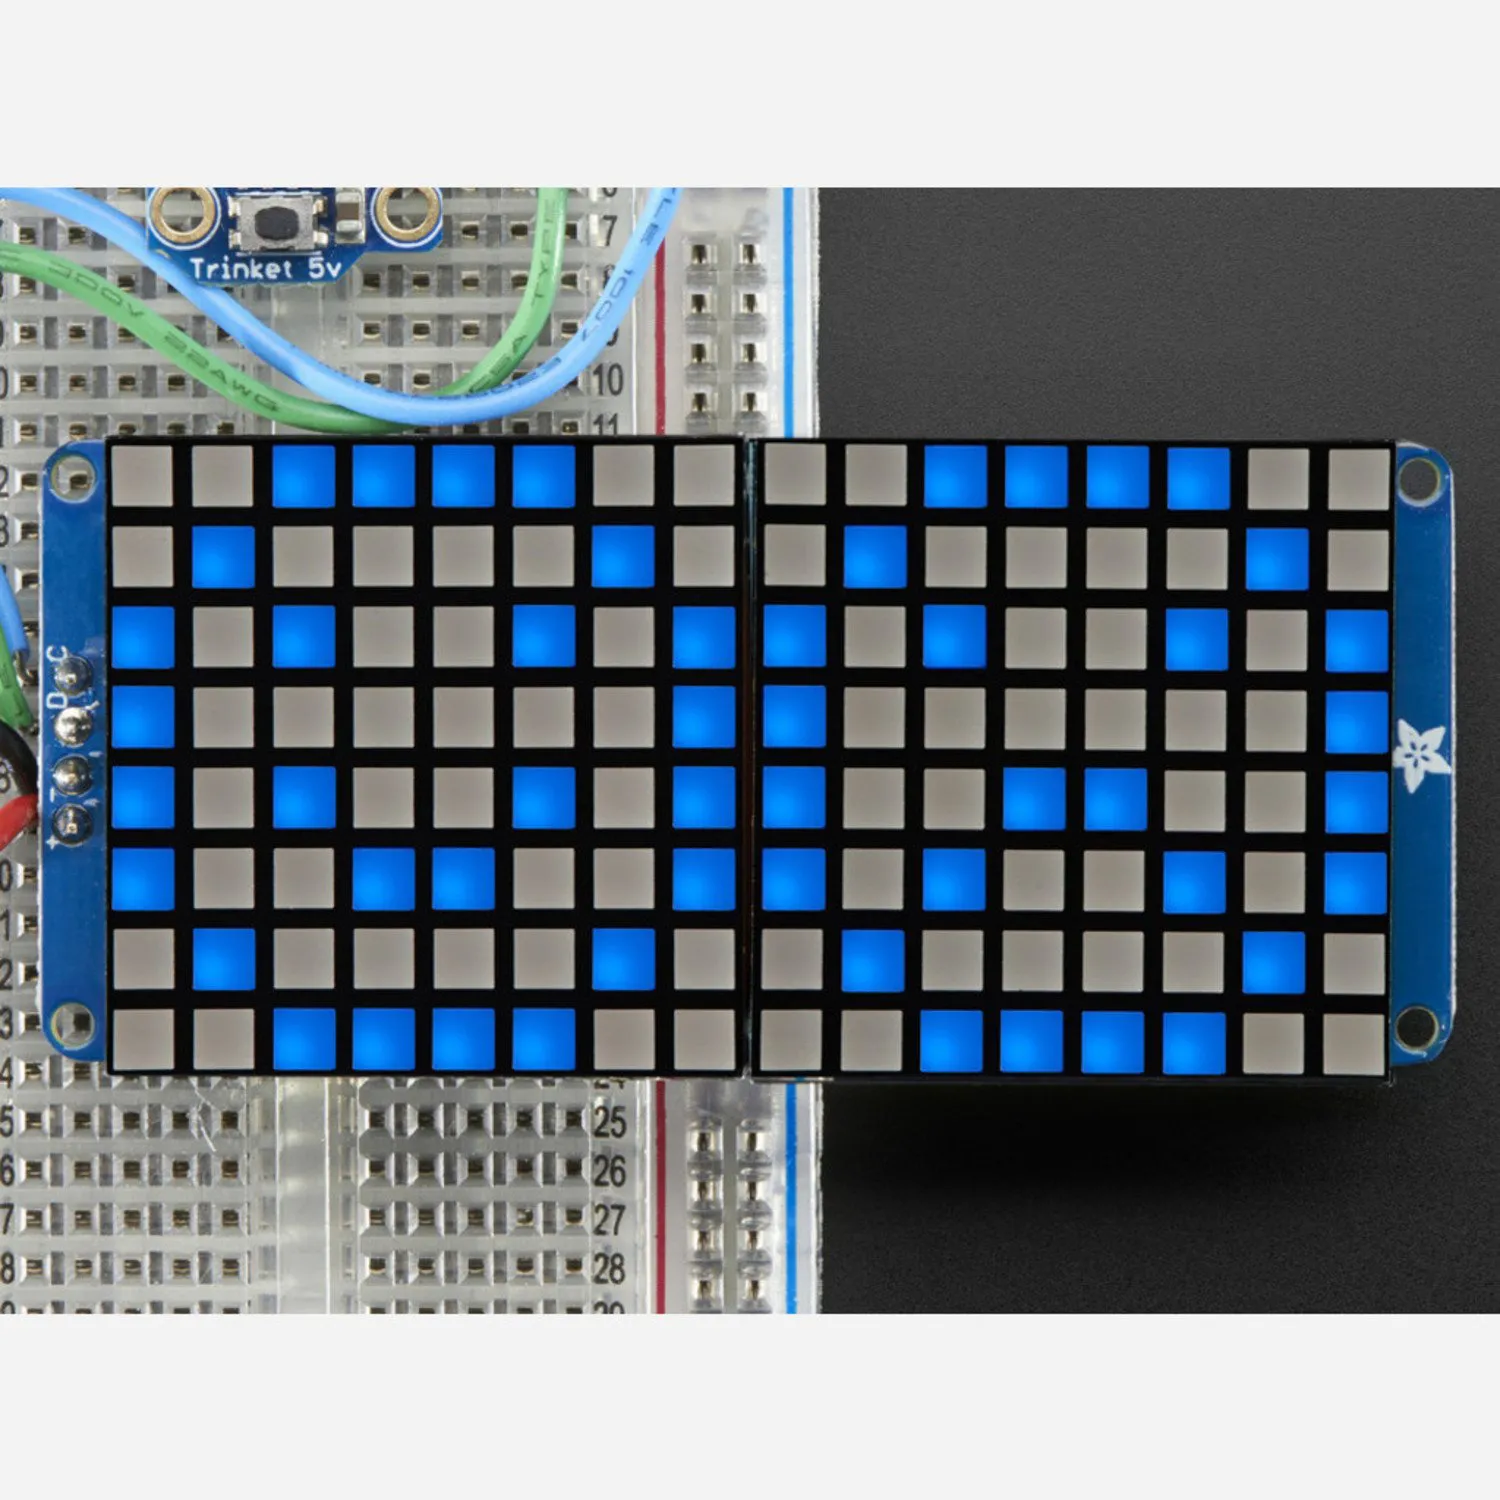 Photo of 16x8 1.2 LED Matrix + Backpack - Ultra Bright Square Blue LEDs